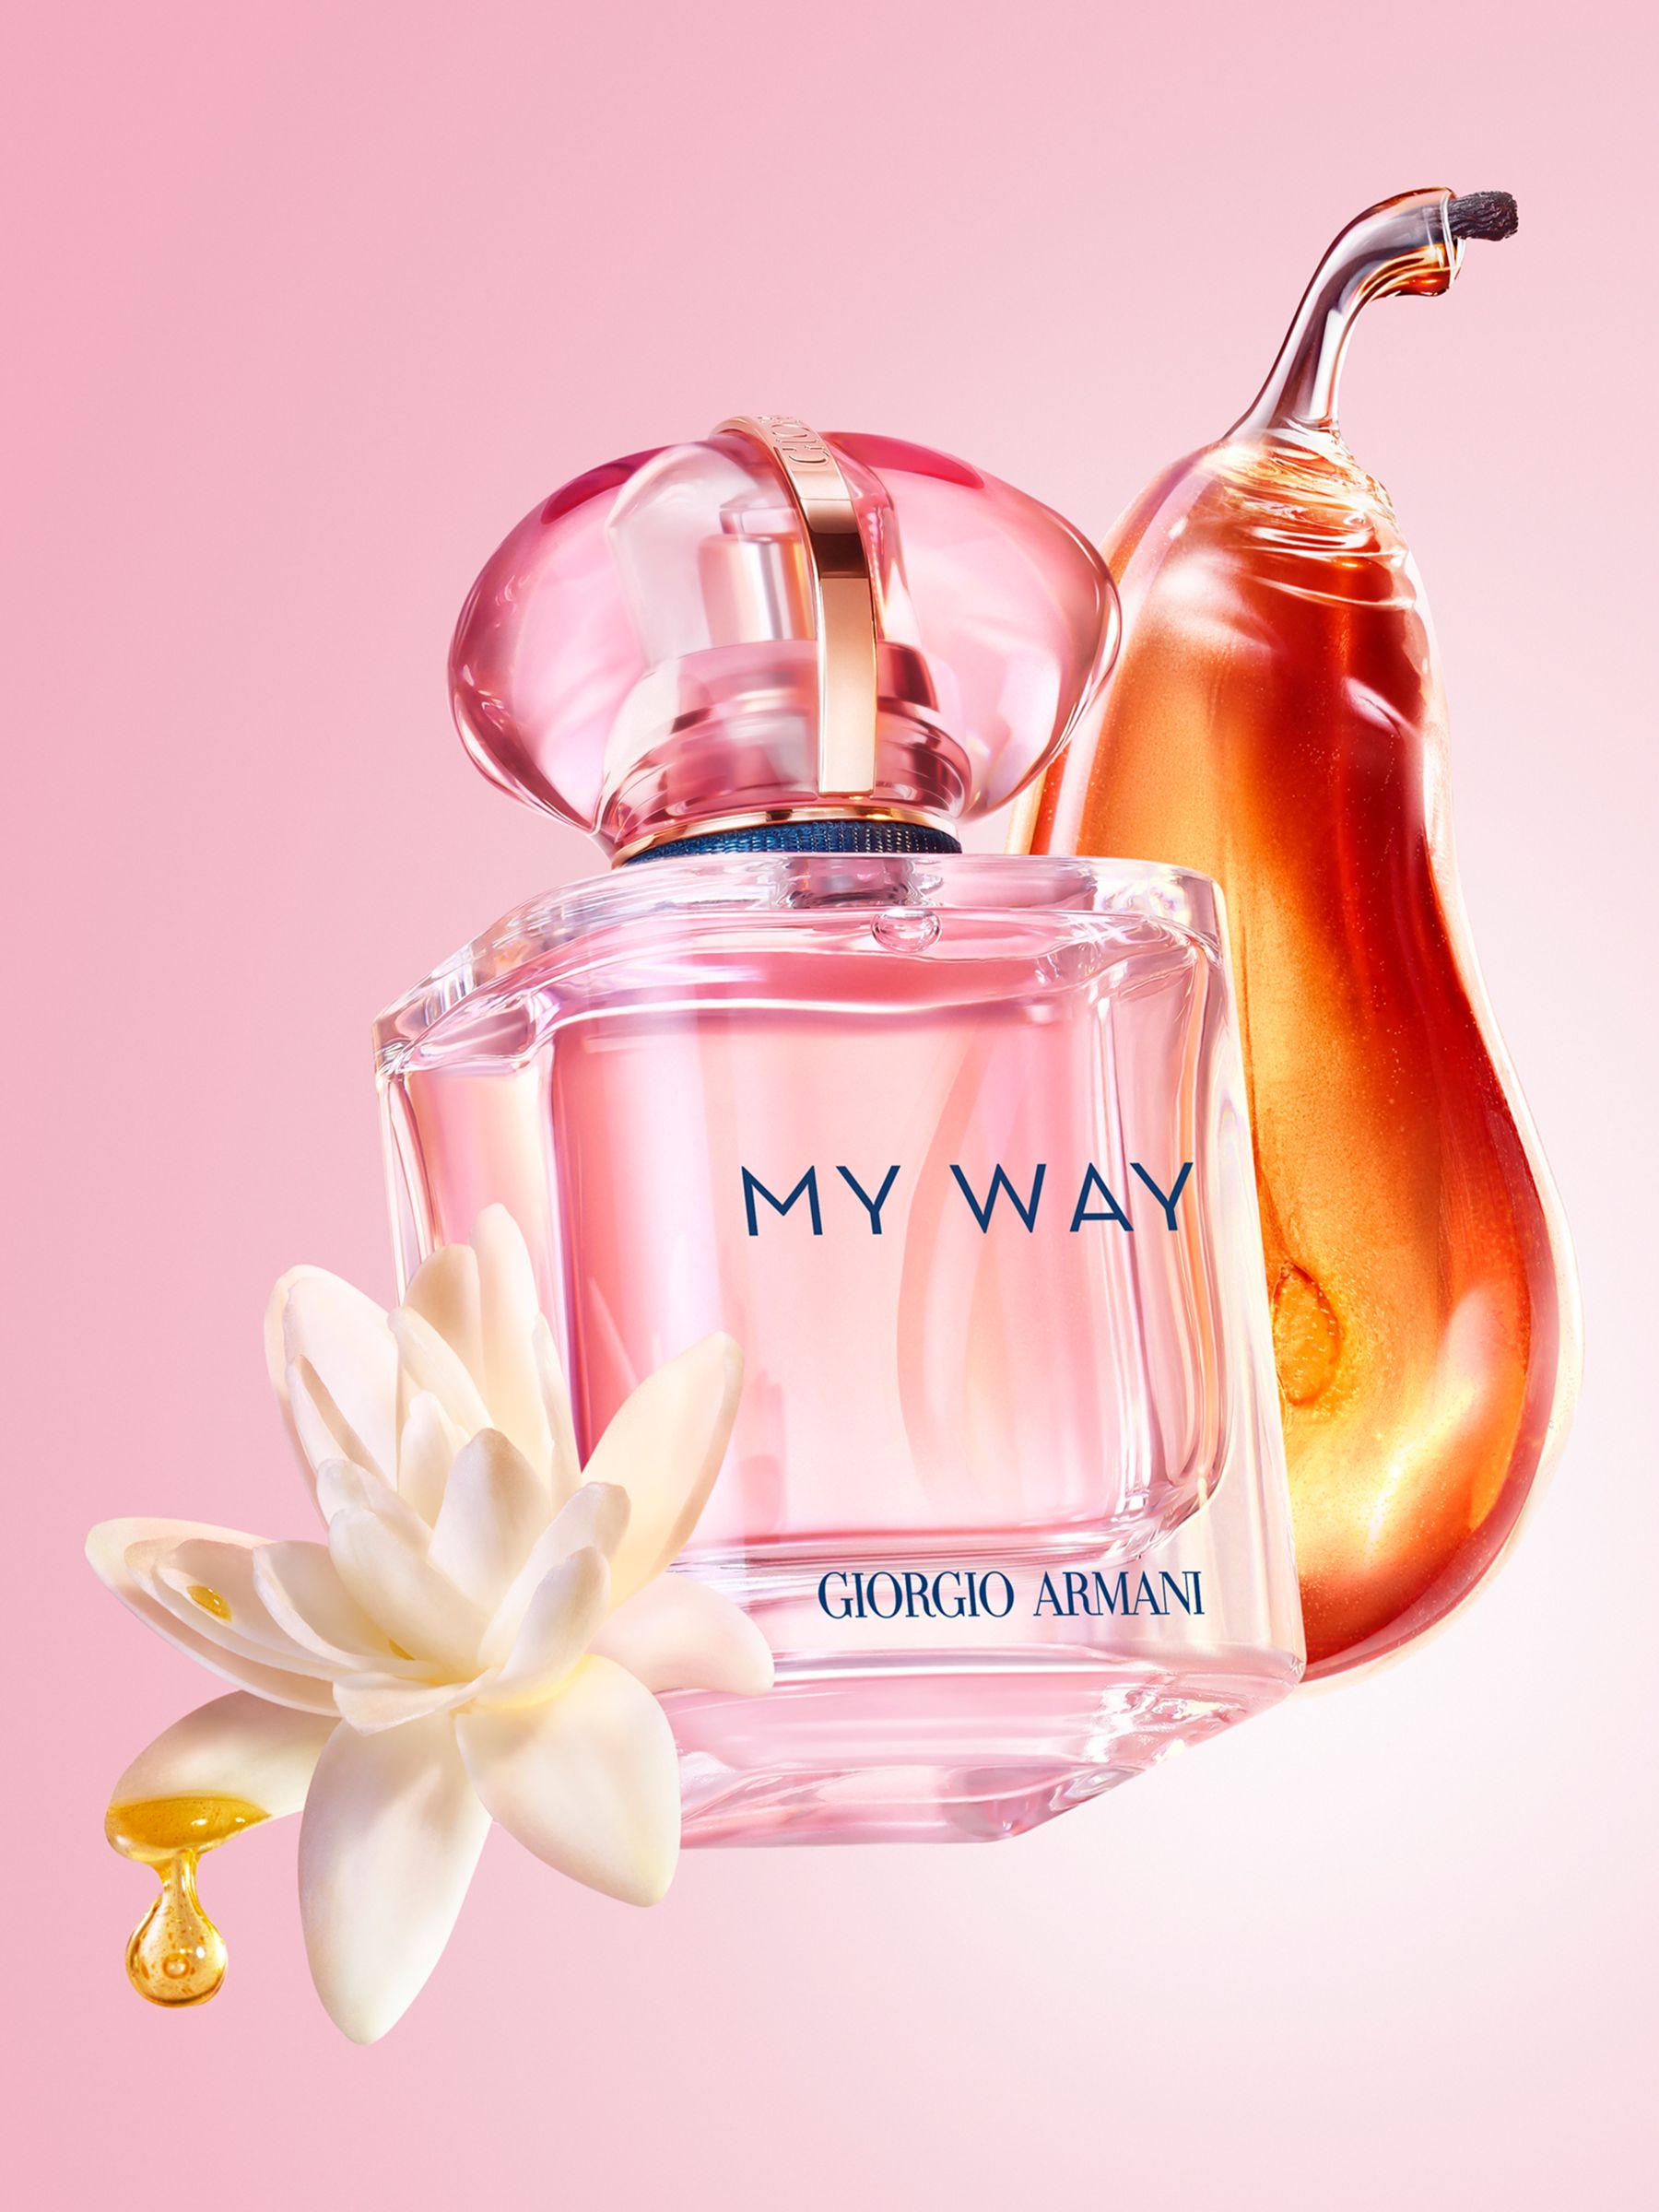 Giorgio Armani My Way Eau de Parfum Nectar, 50ml 2